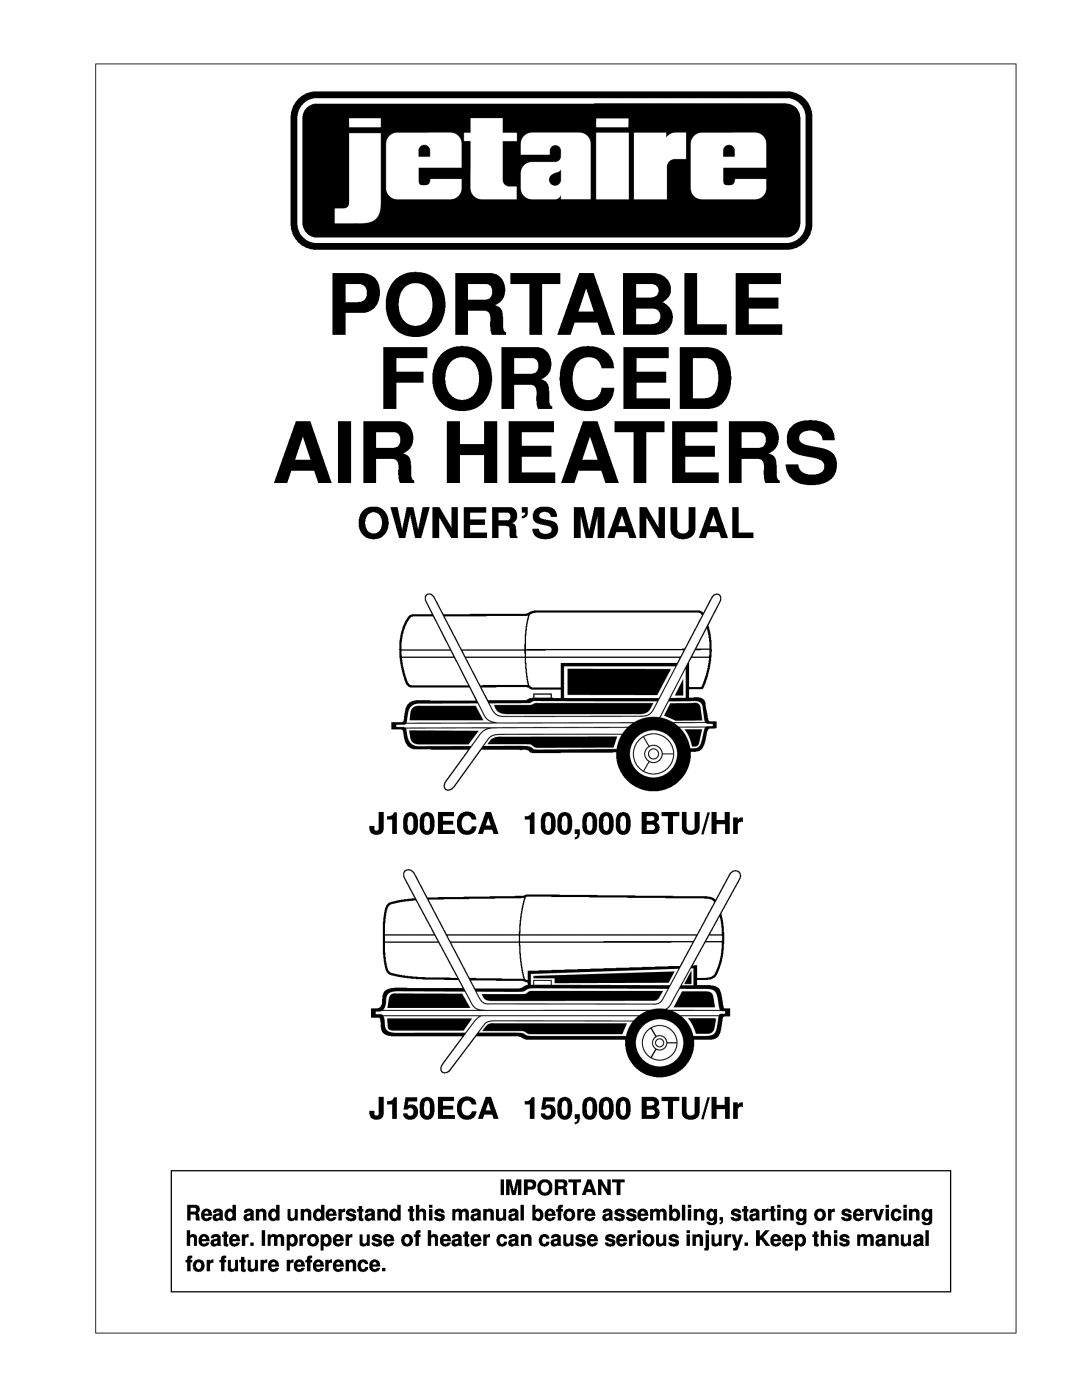 Jet Tools owner manual J100ECA 100,000 BTU/Hr, J150ECA 150,000 BTU/Hr, Portable Forced Air Heaters, Side 